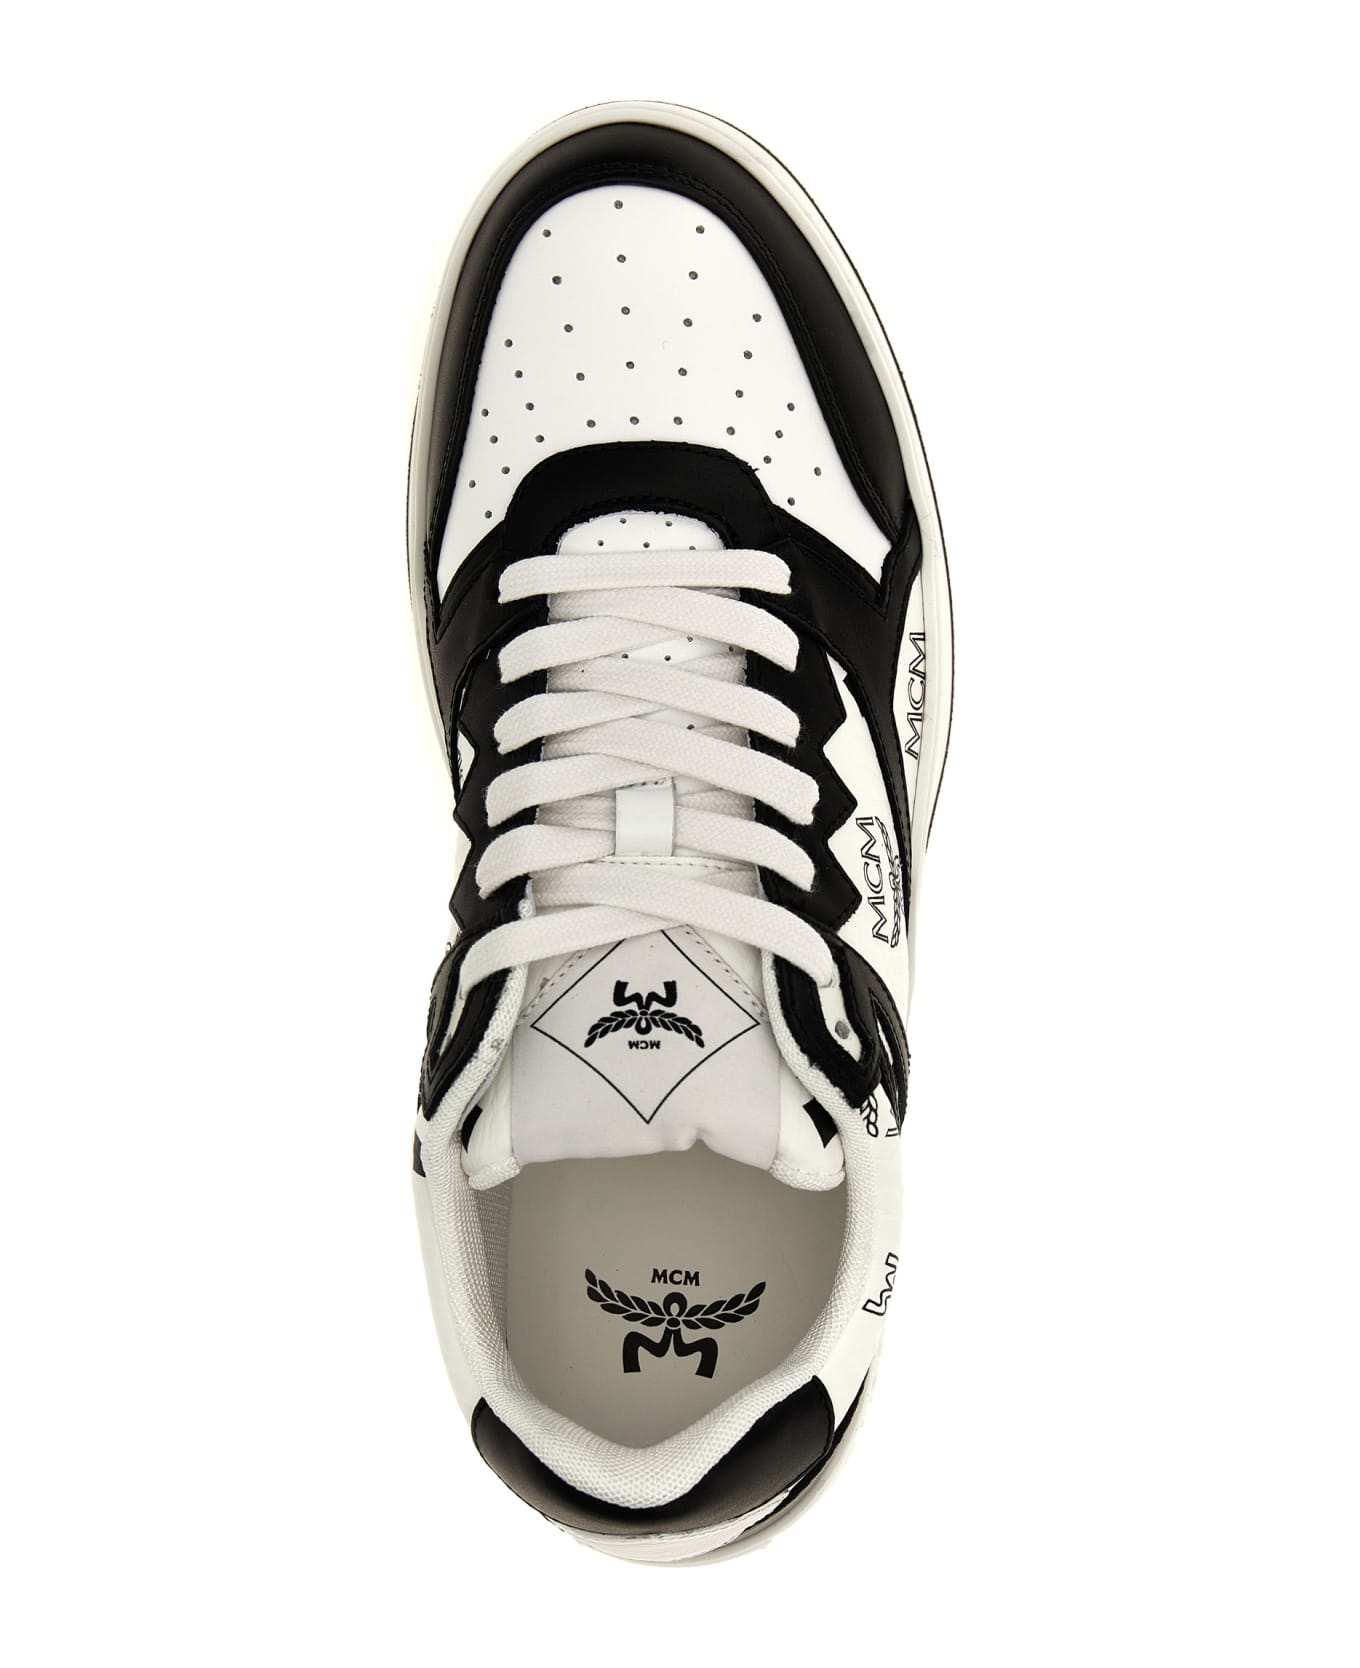 MCM 'neo Terrain' Sneakers - White/Black